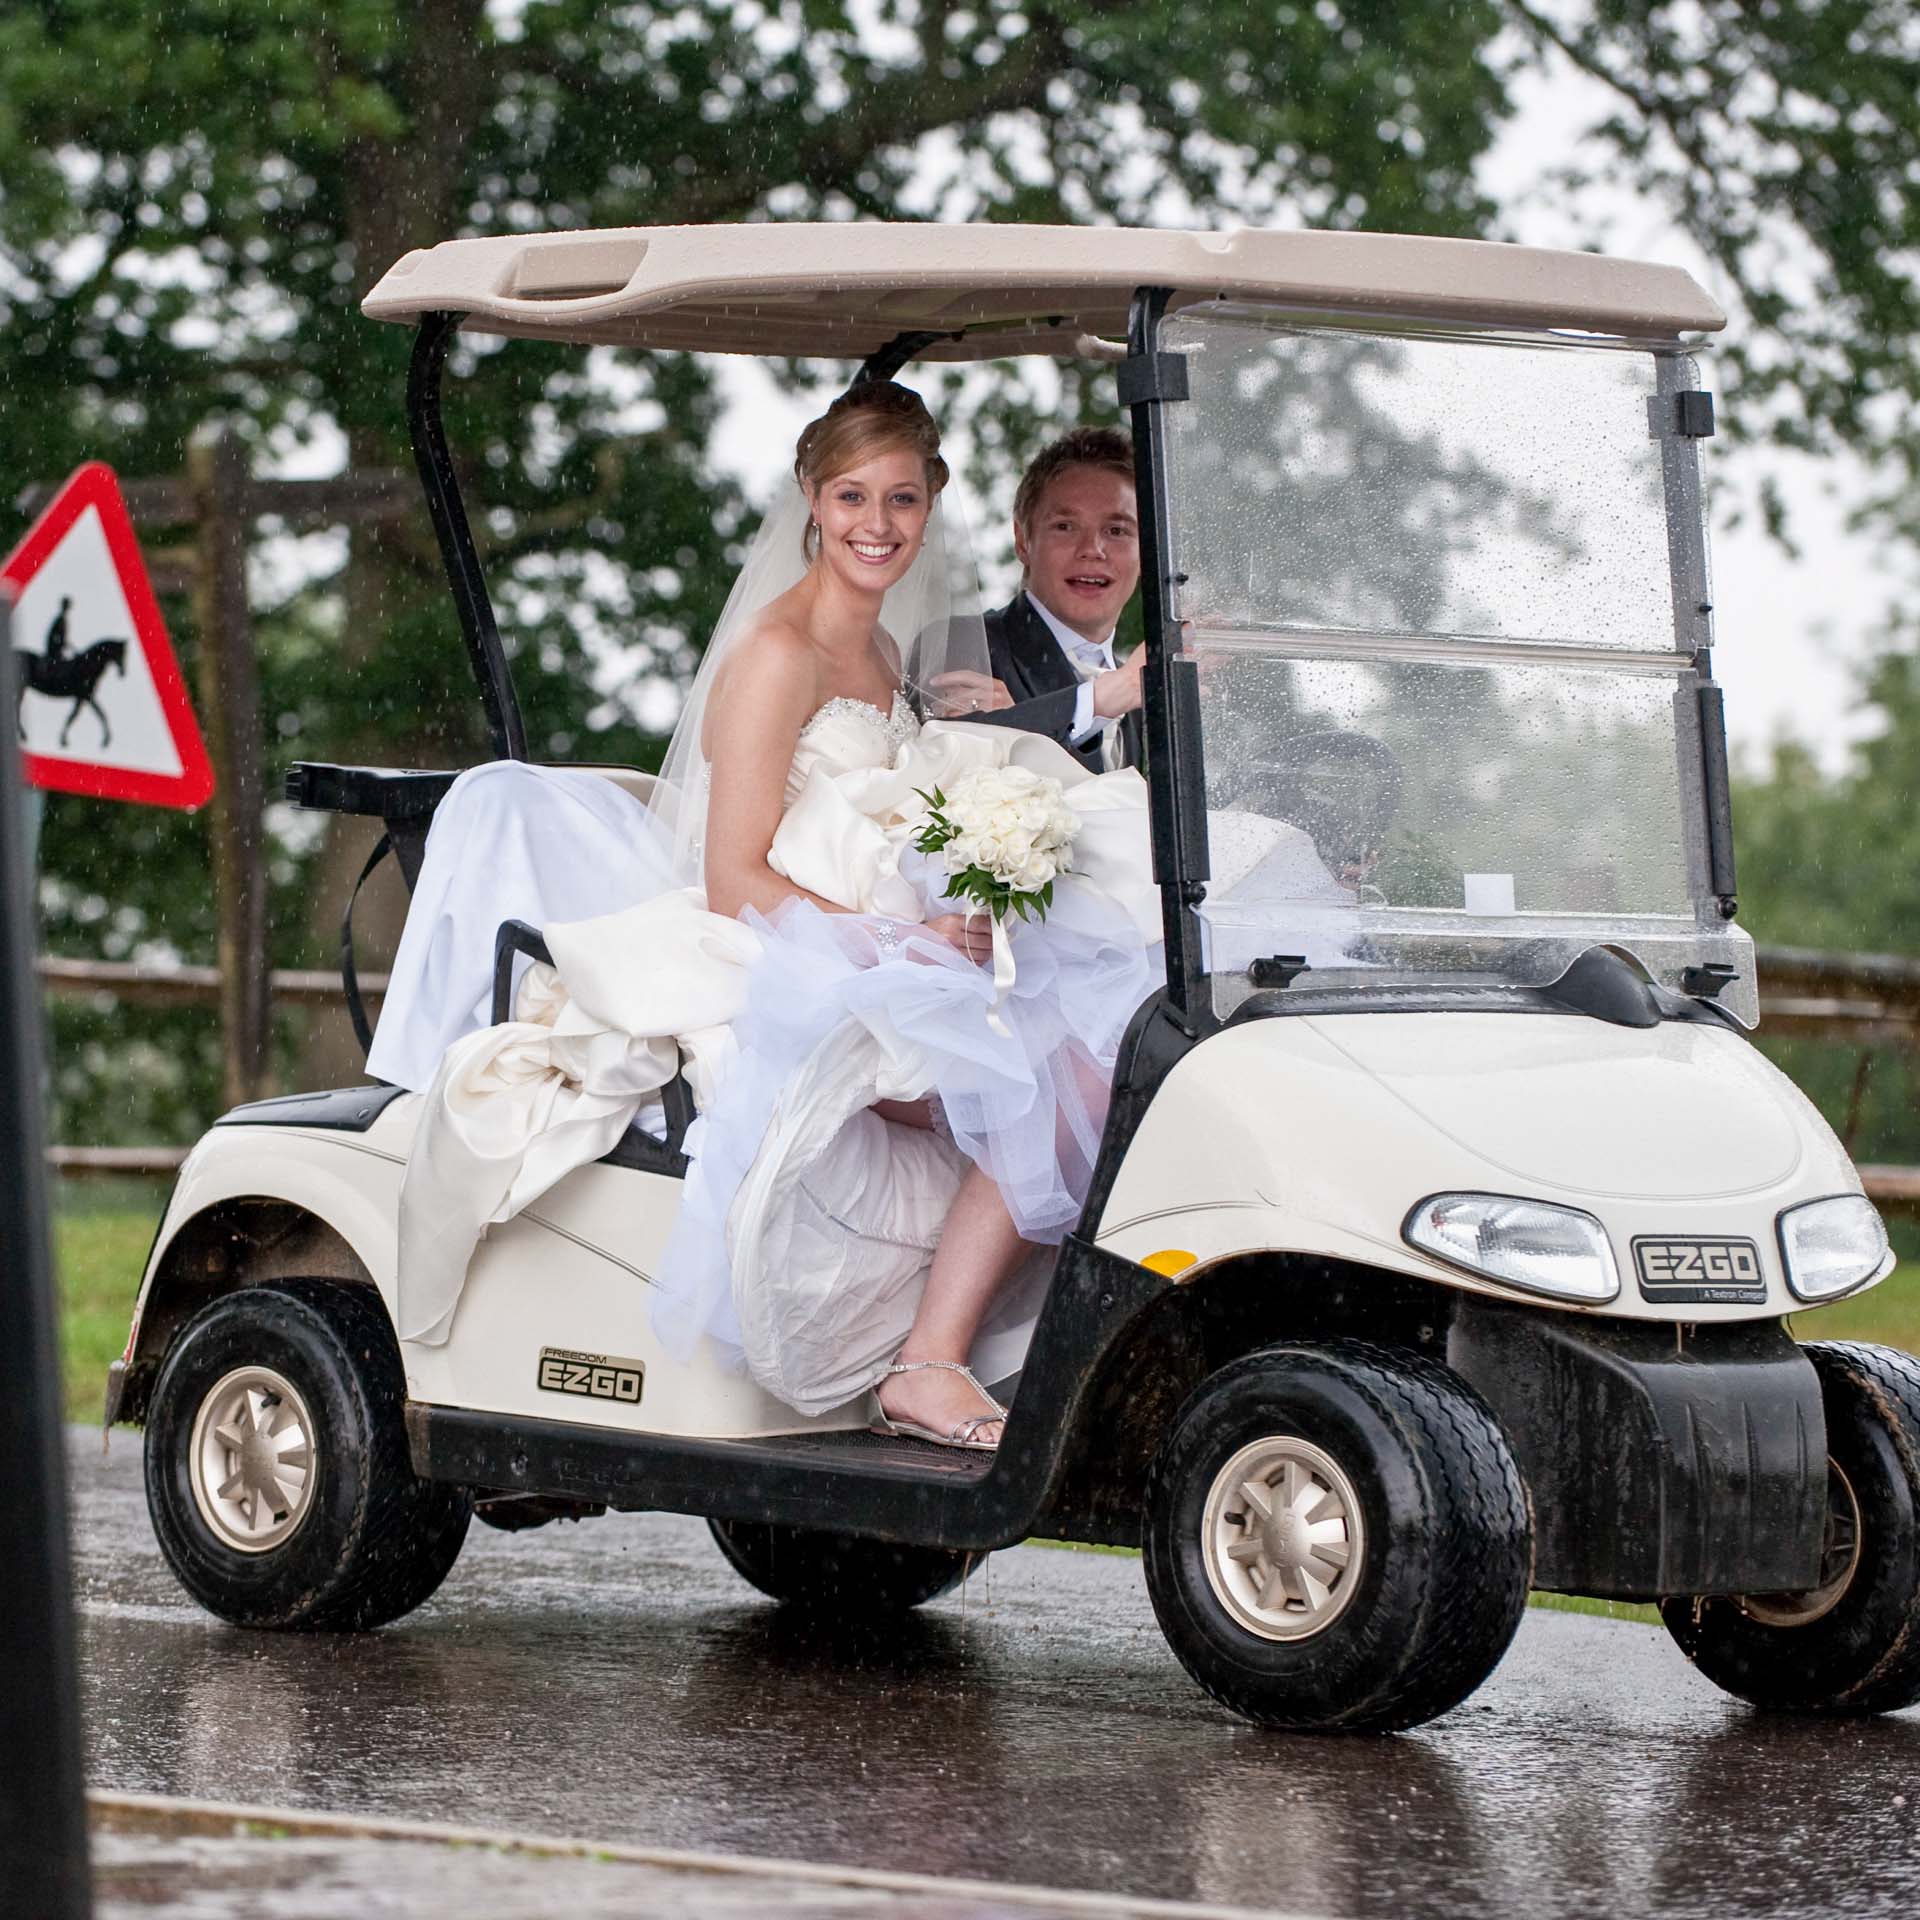 St Johns church caterham surrey Surrey national golf course chaldon wedding photographer